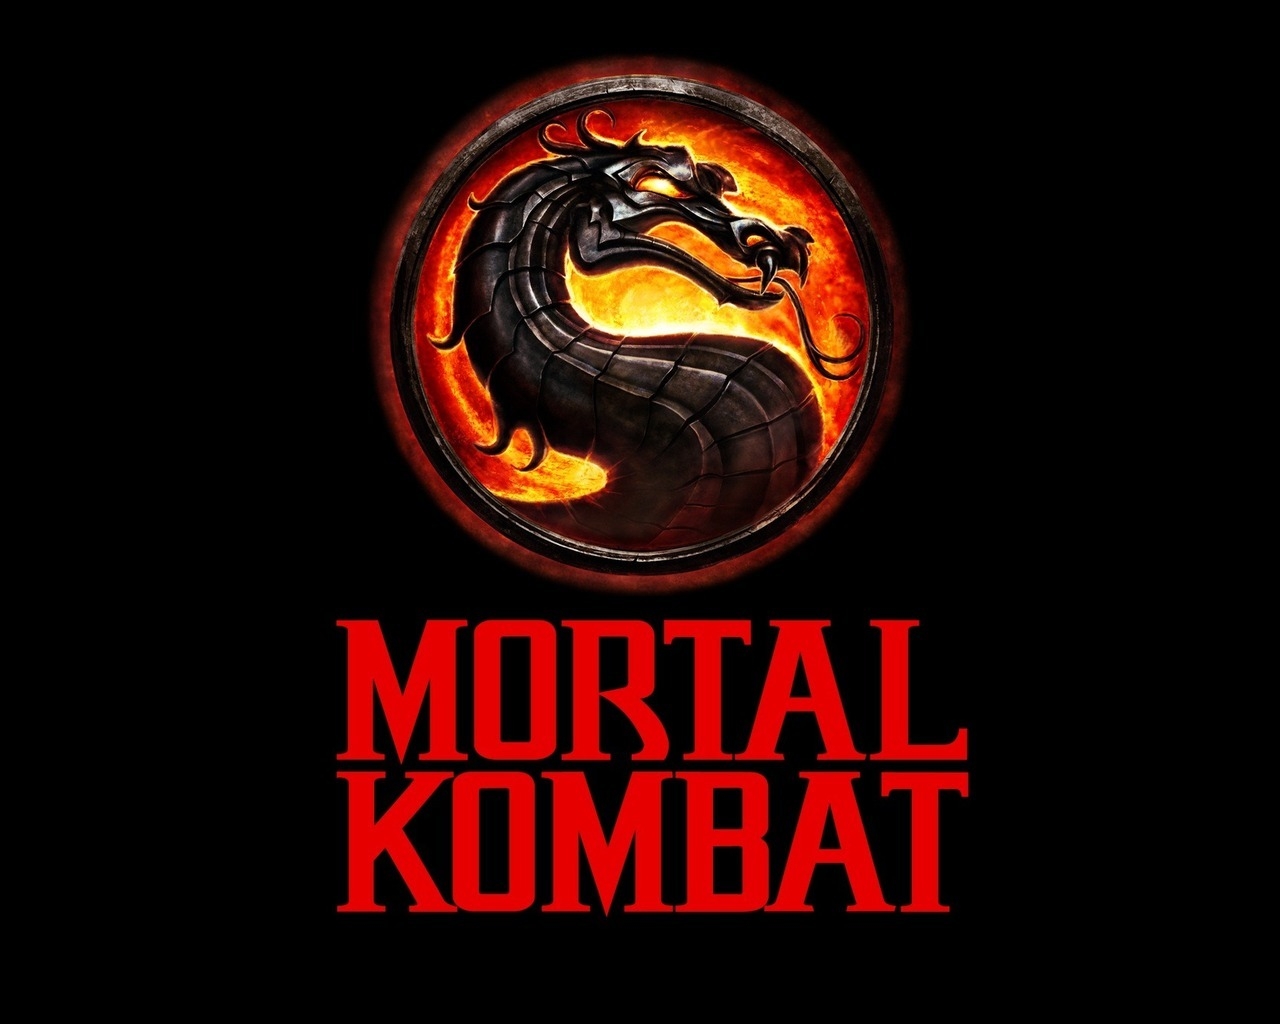 Mortal Kombat Logo for 1280 x 1024 resolution